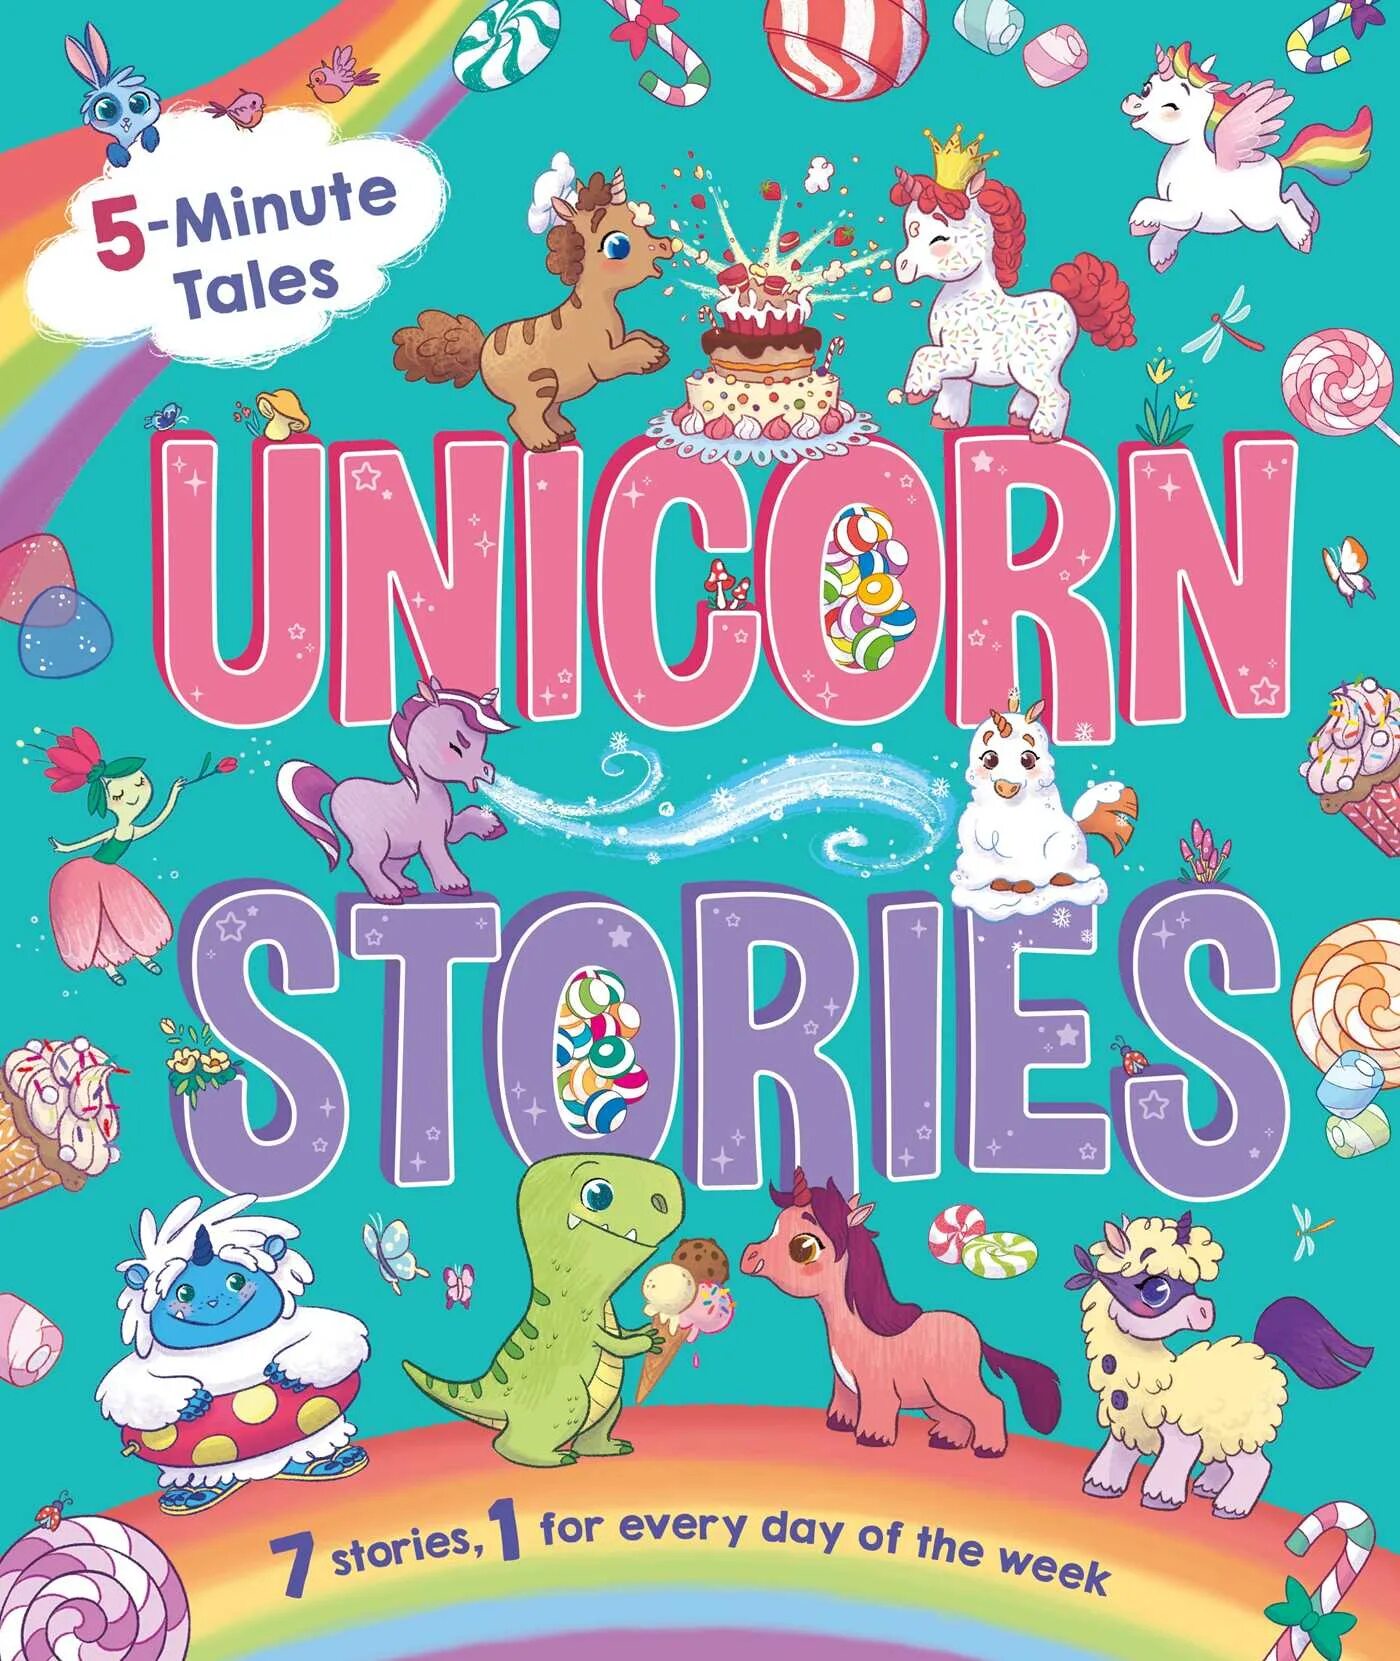 Unicorn книги. Unicorn book книги. Книга с единорогом на обложке. Stories of Unicorns | Dickins Rosie книга. Unicorn book